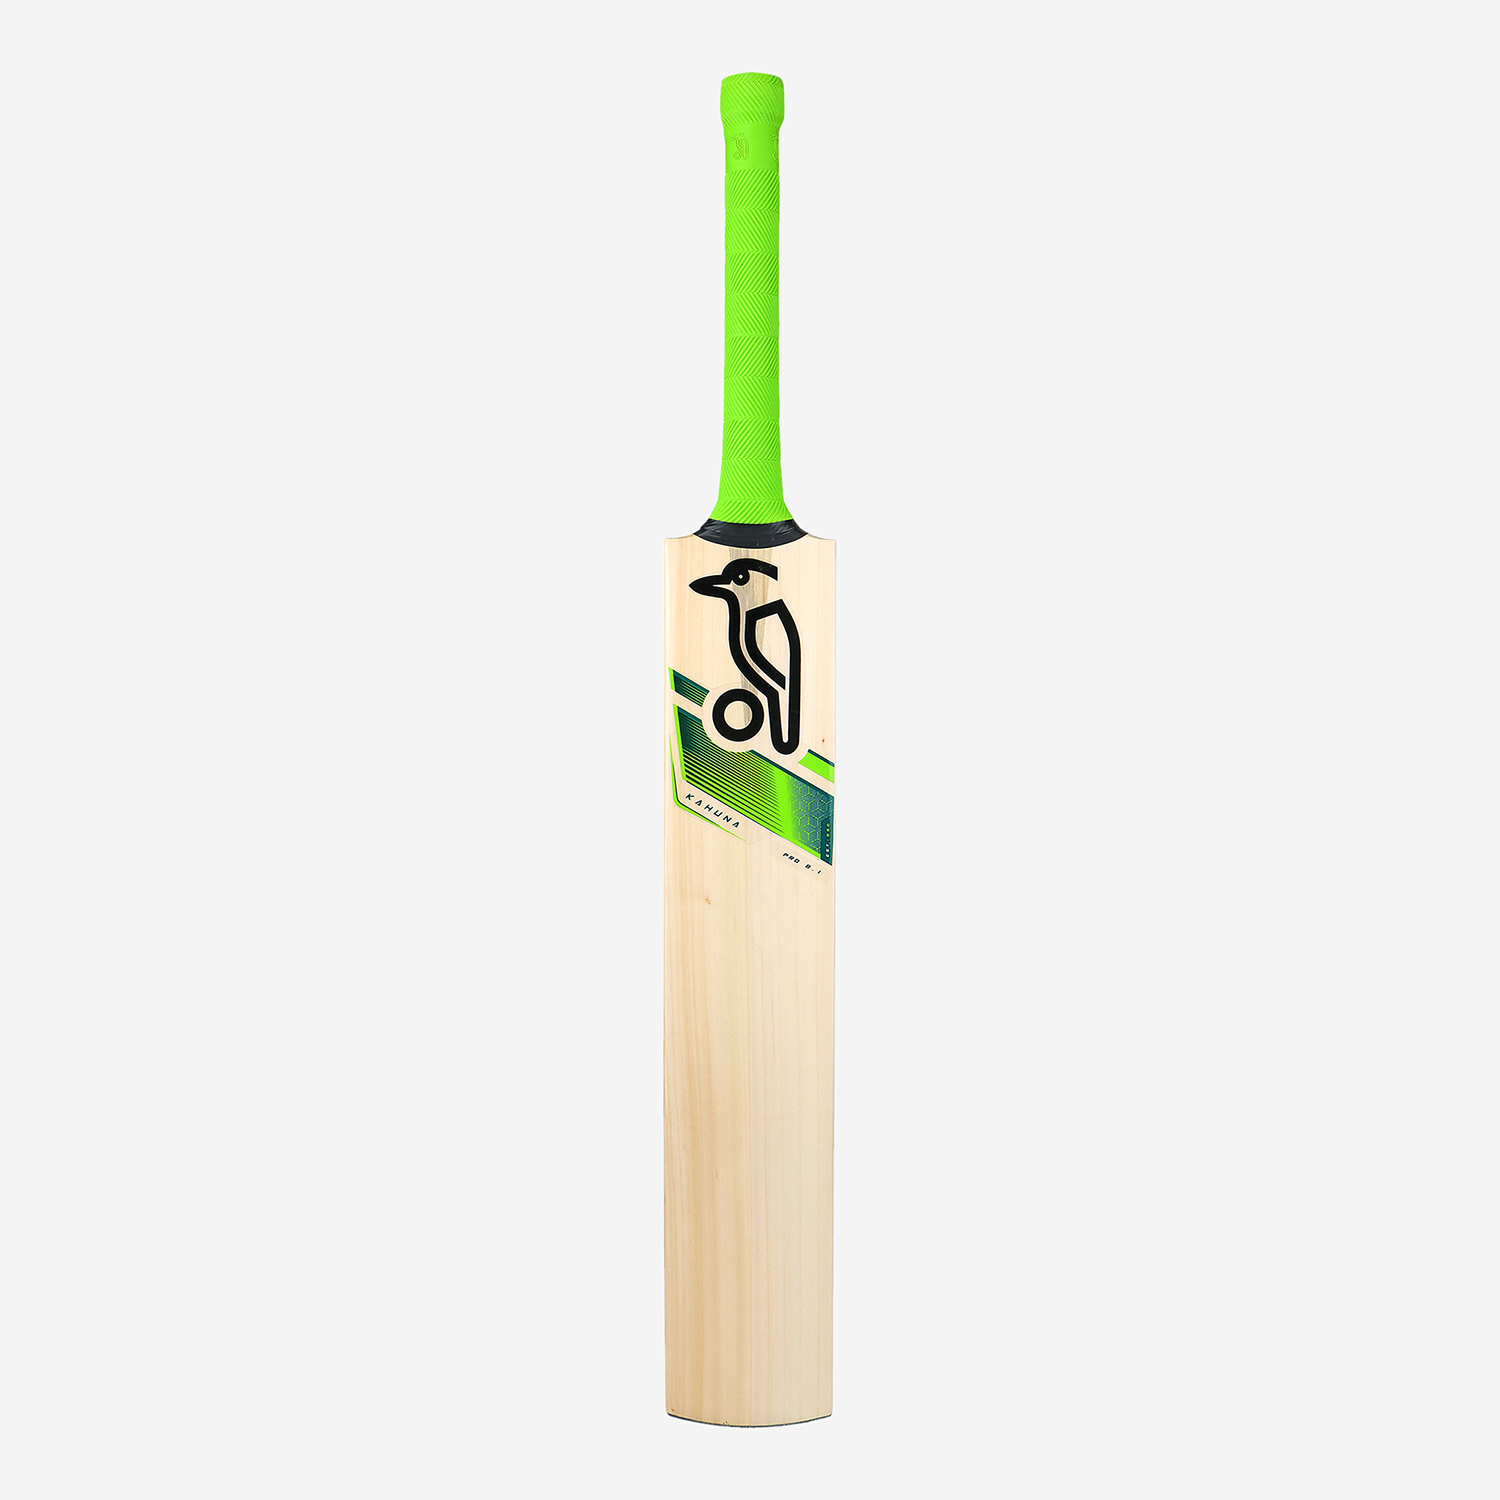 Pro 8.1 Kahuna Kashmir Senior Cricket Bat